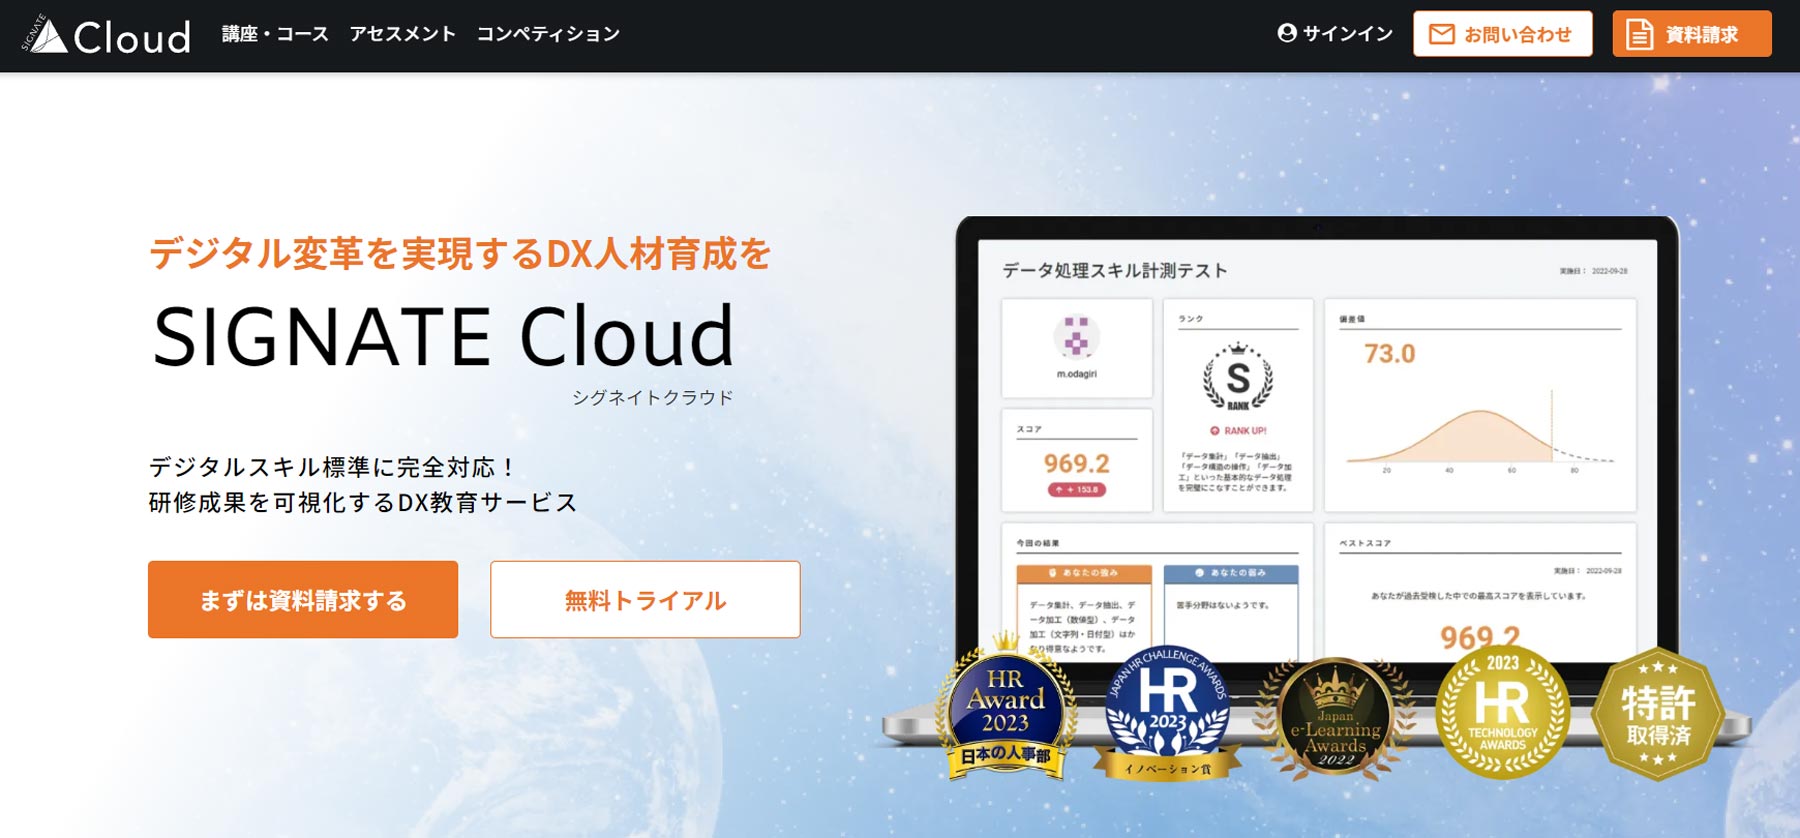 SIGNATE Cloud公式Webサイト